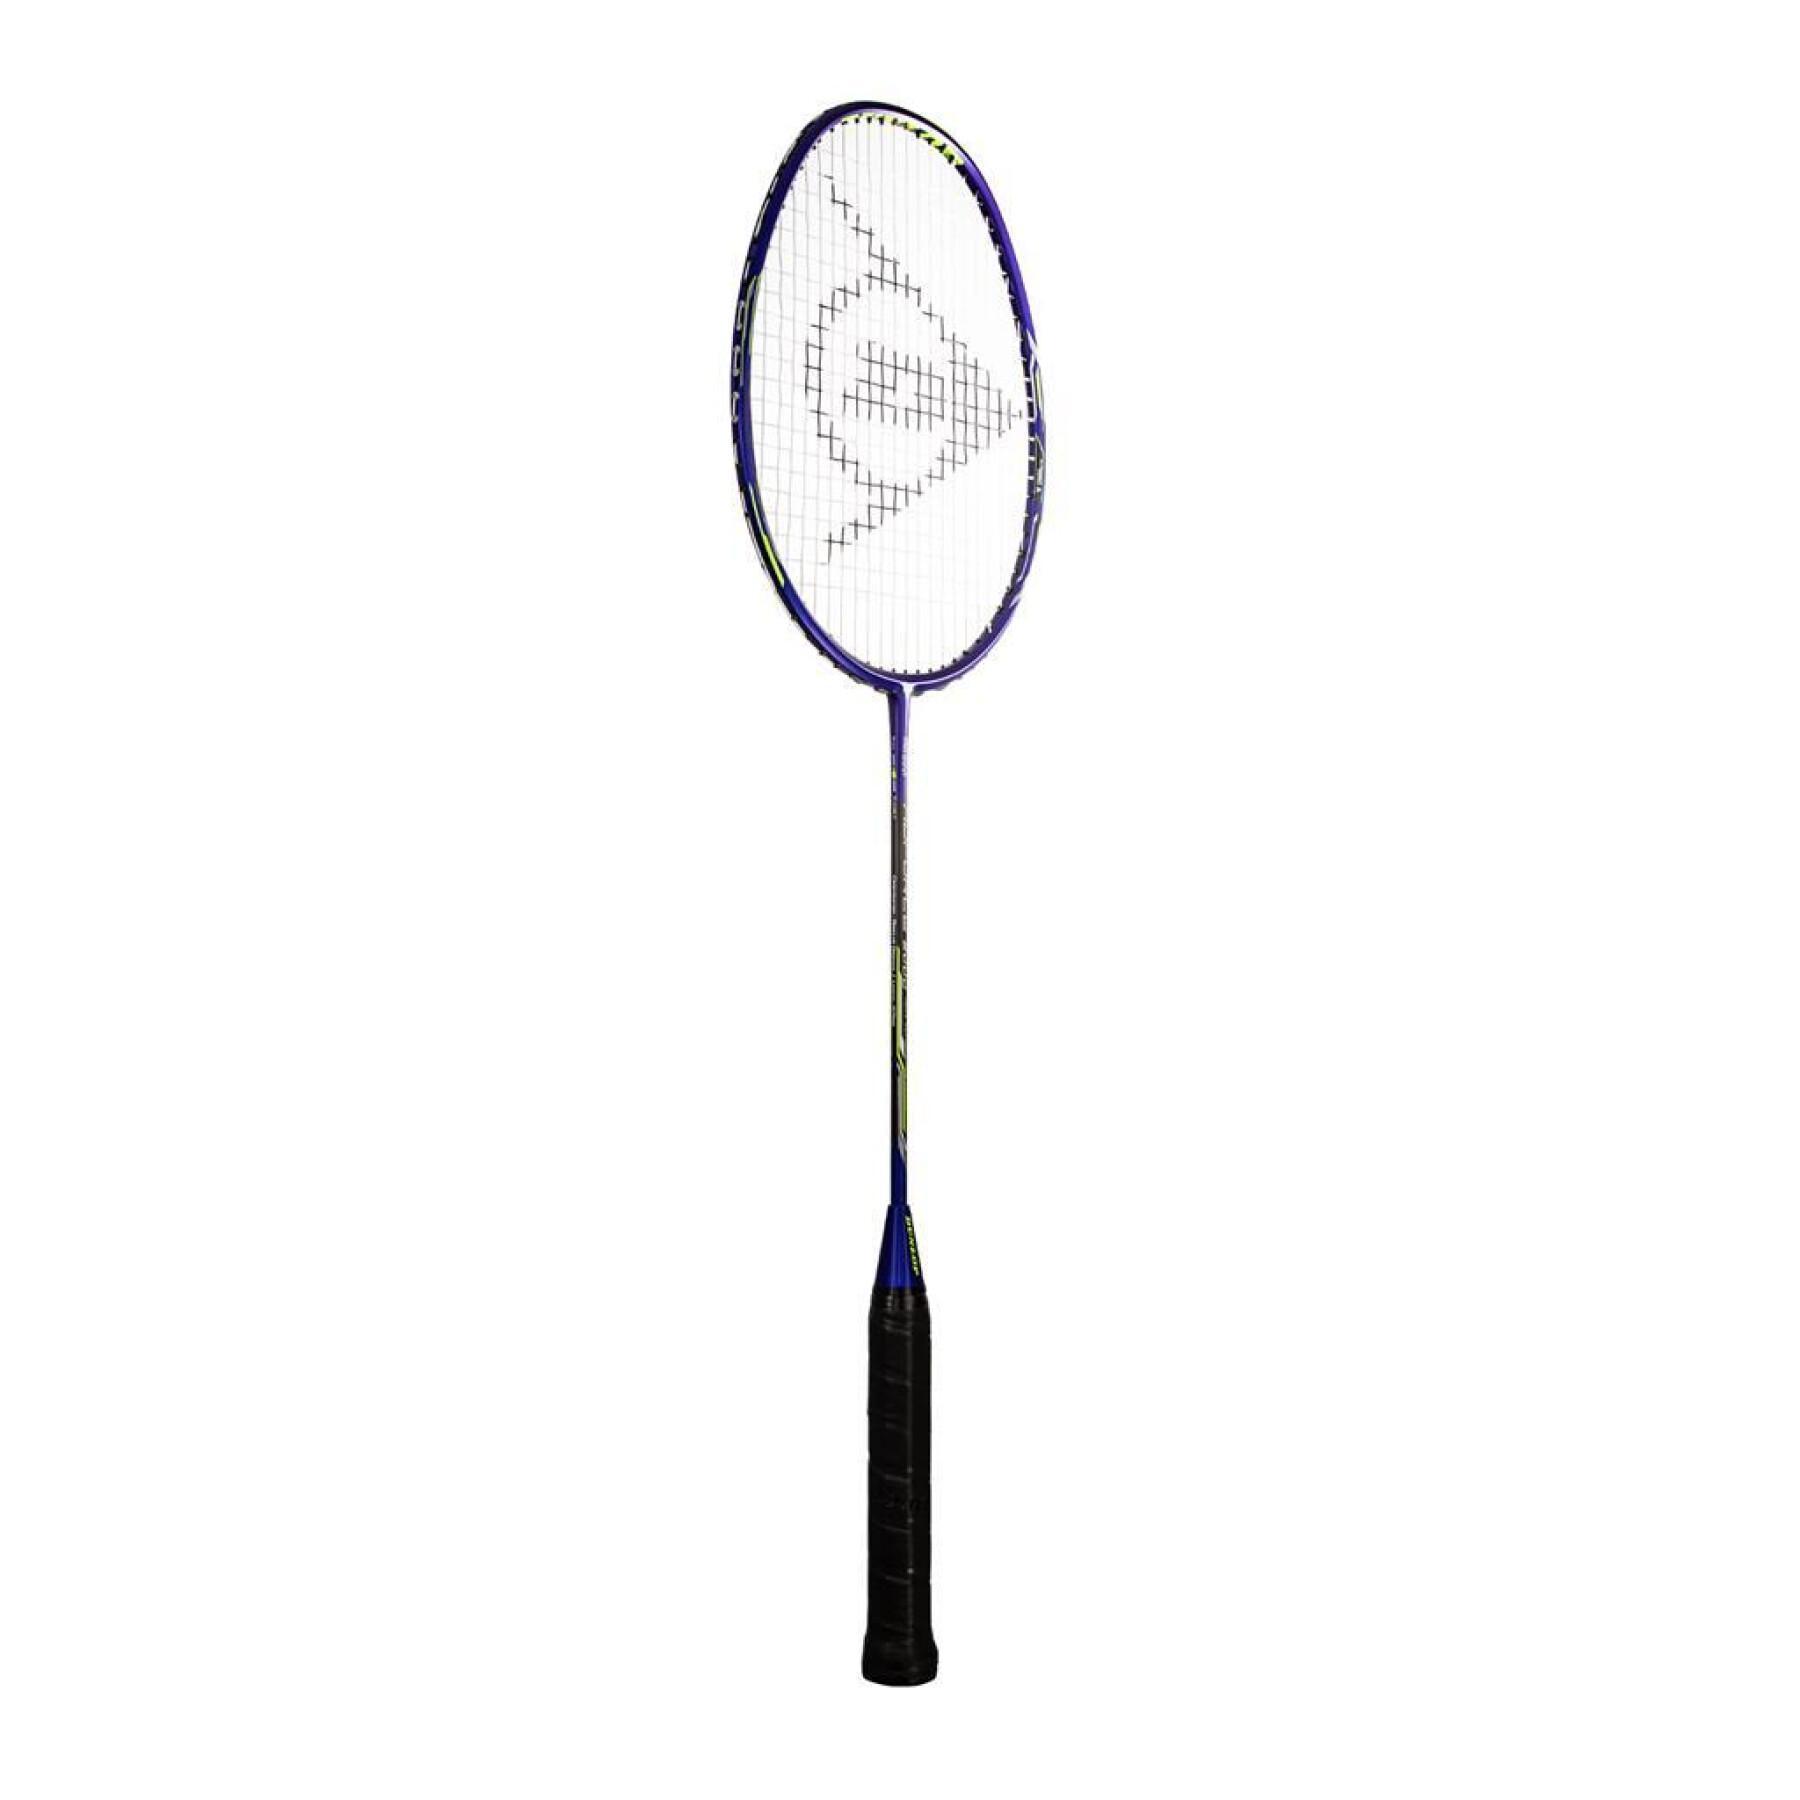 Rakieta do badmintona Dunlop Adforce 2000 G3 Hl